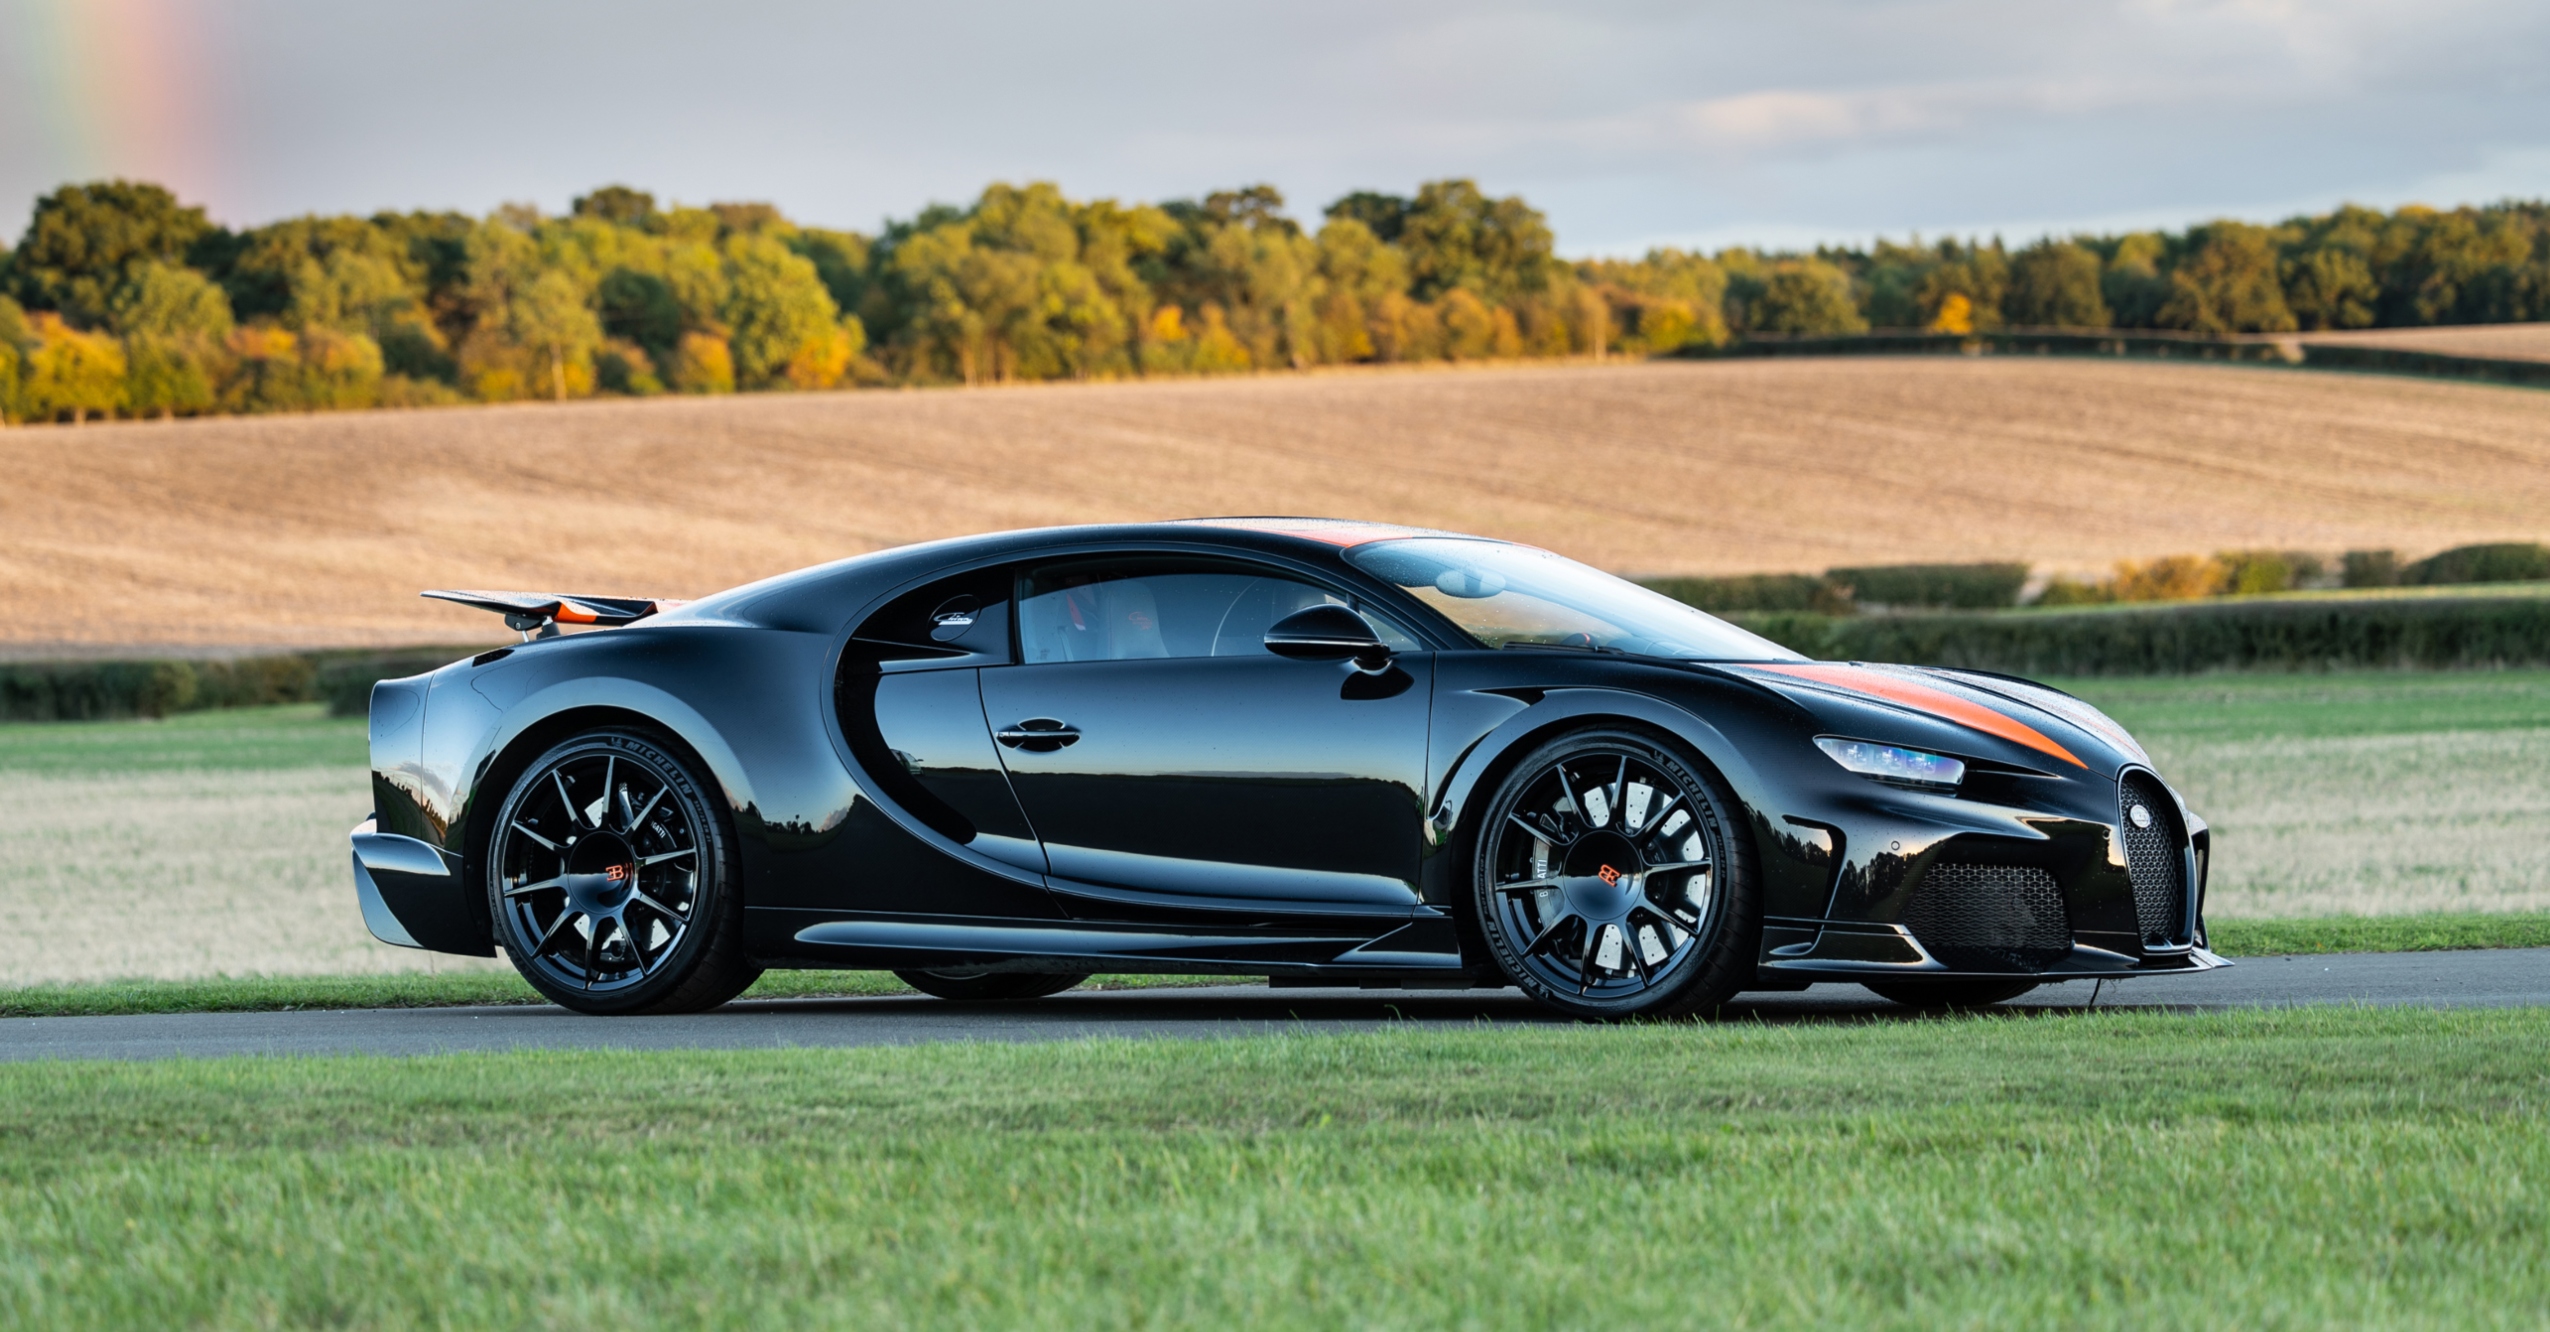 https://www.maxim.com/wp-content/uploads/2022/10/2022-Bugatti-Chiron-Super-Sport-300-Promo.jpg